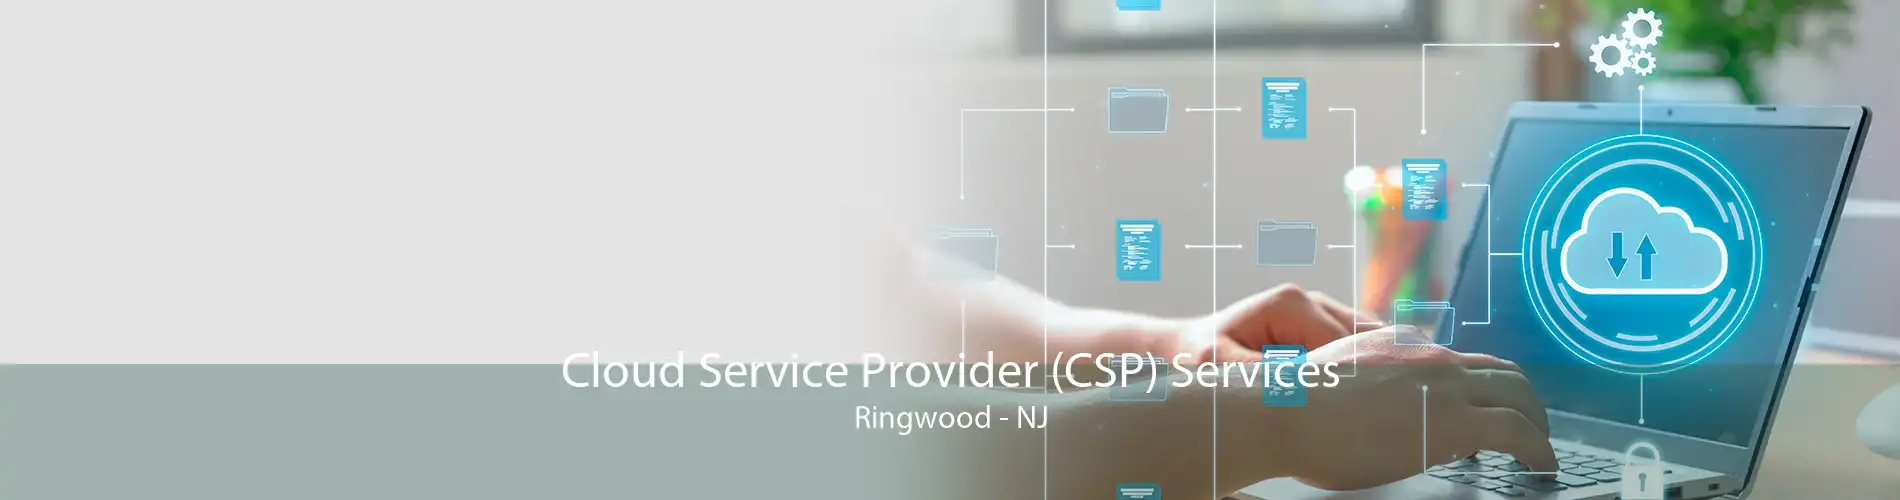 Cloud Service Provider (CSP) Services Ringwood - NJ